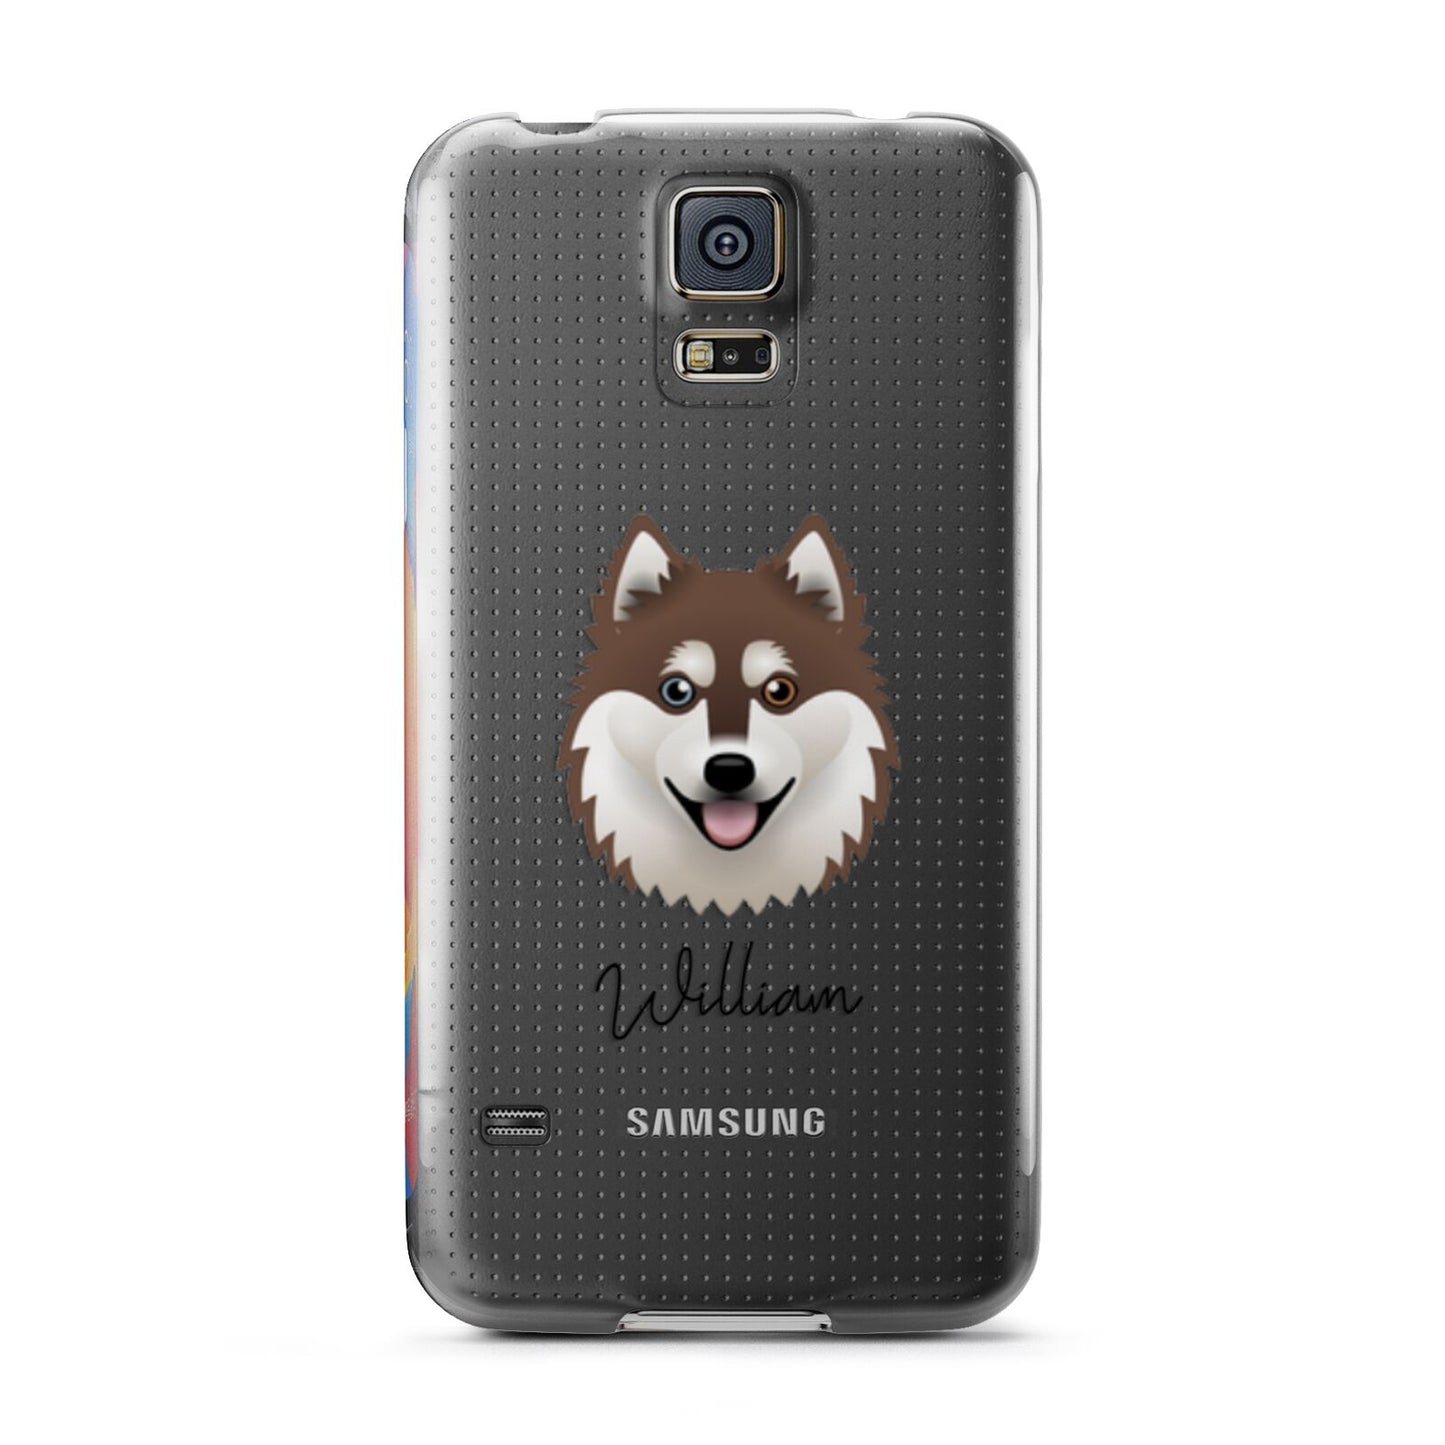 Alaskan Klee Kai Personalised Samsung Galaxy S5 Case